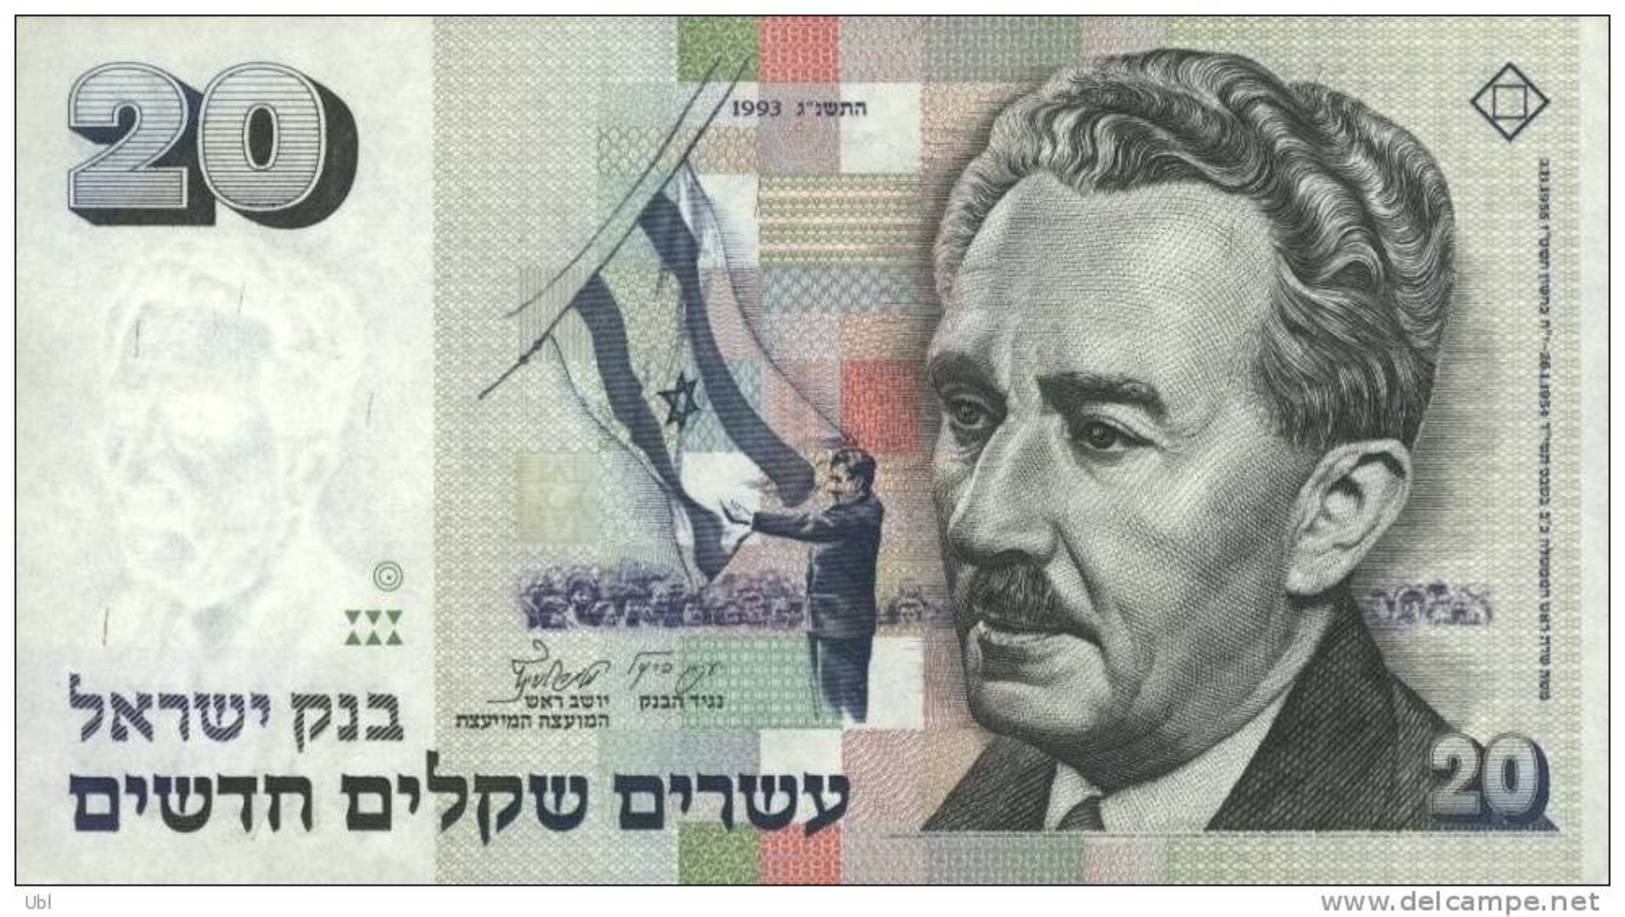 ISRAEL 1993 - NIS 20 - Moshe Sharett- Signed Jacob Frenkel & Shlomo Lorincz - UNC - Israel